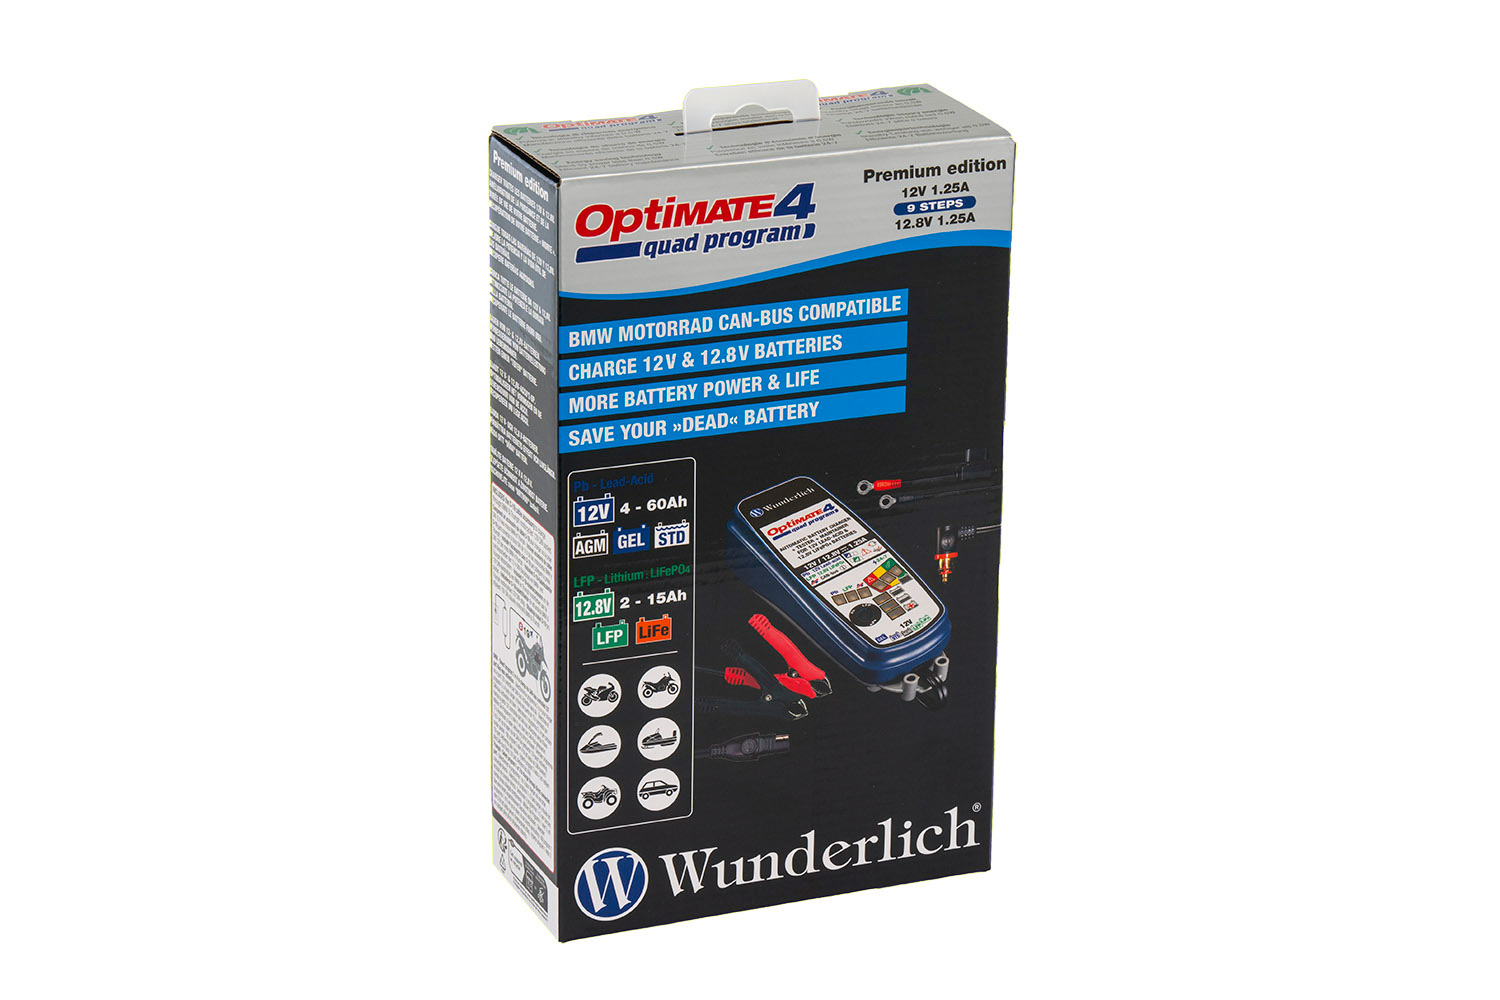 Wunderlich Edition Batterieladegerät Optimate 4 Quad-Program Canbus Edition